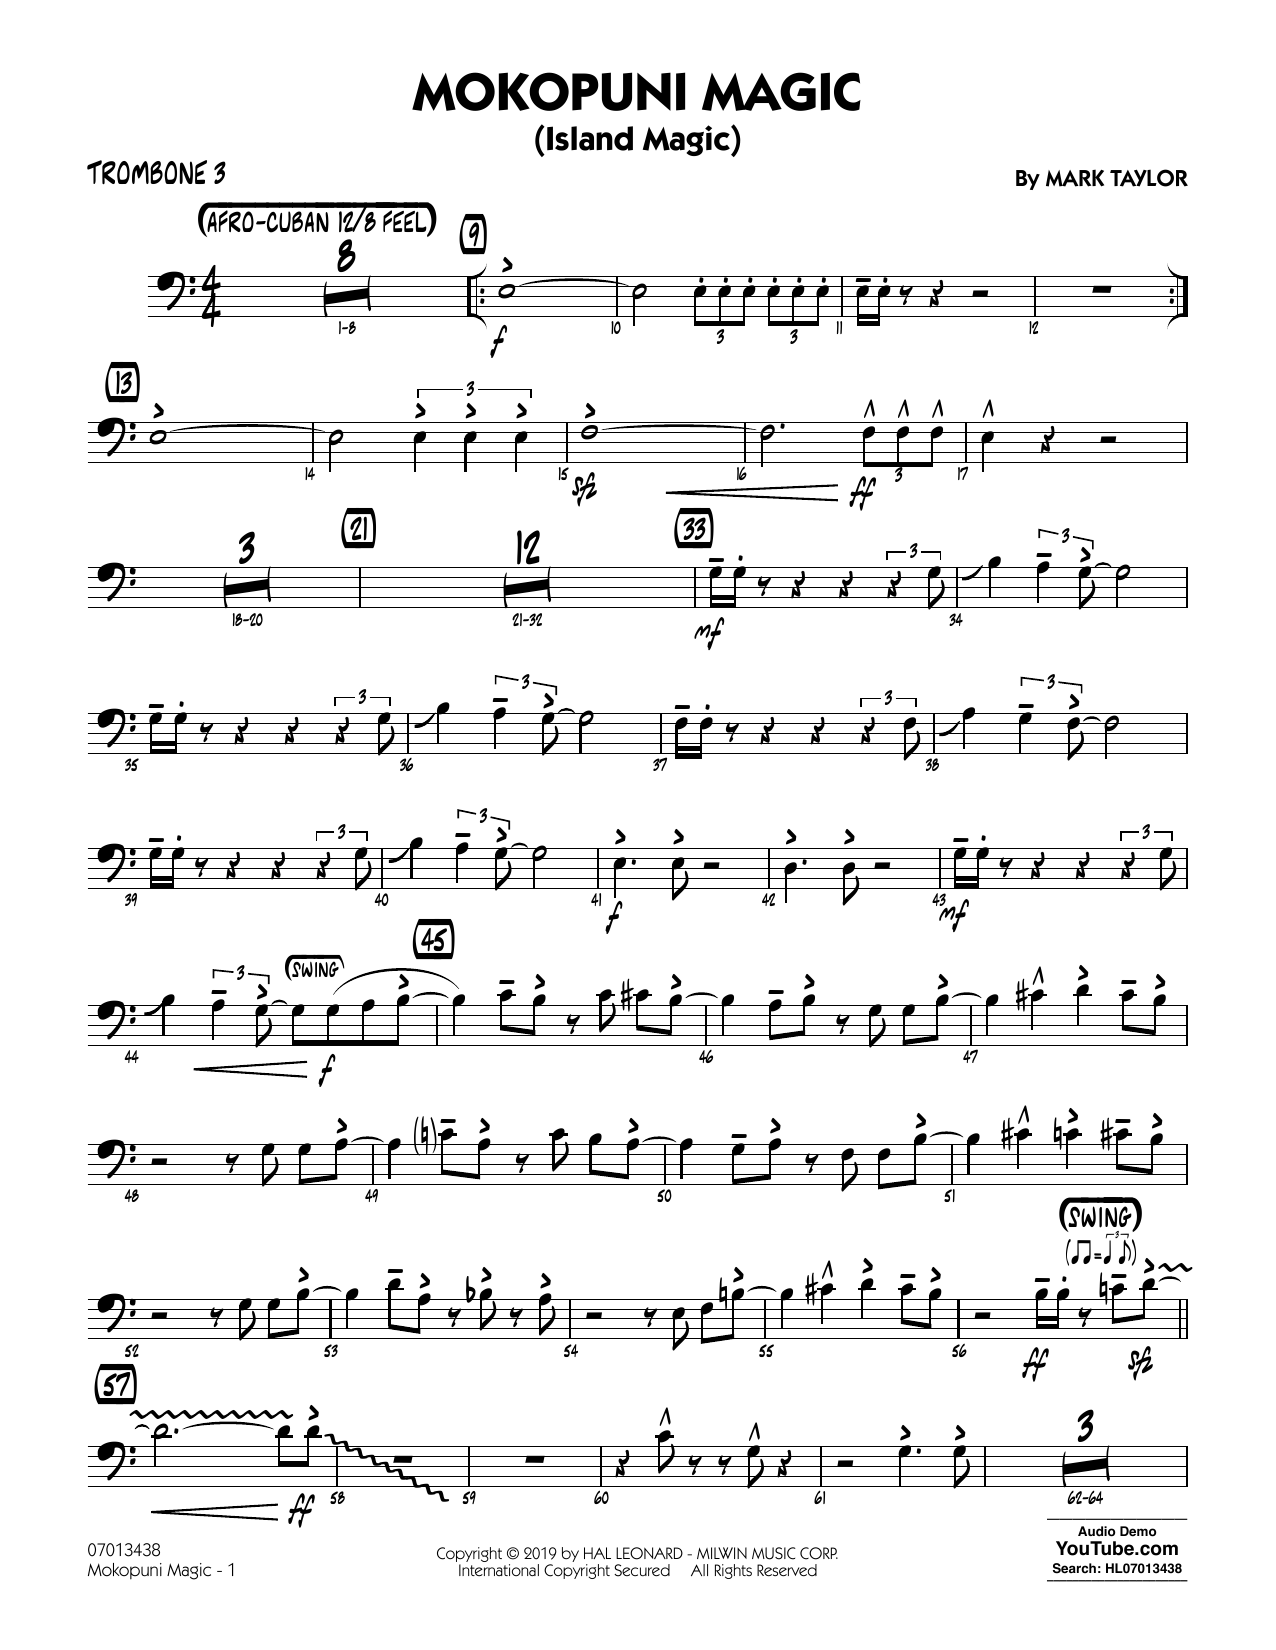 Mark Taylor Mokopuni Magic (Island Magic) - Trombone 3 Sheet Music Notes & Chords for Jazz Ensemble - Download or Print PDF